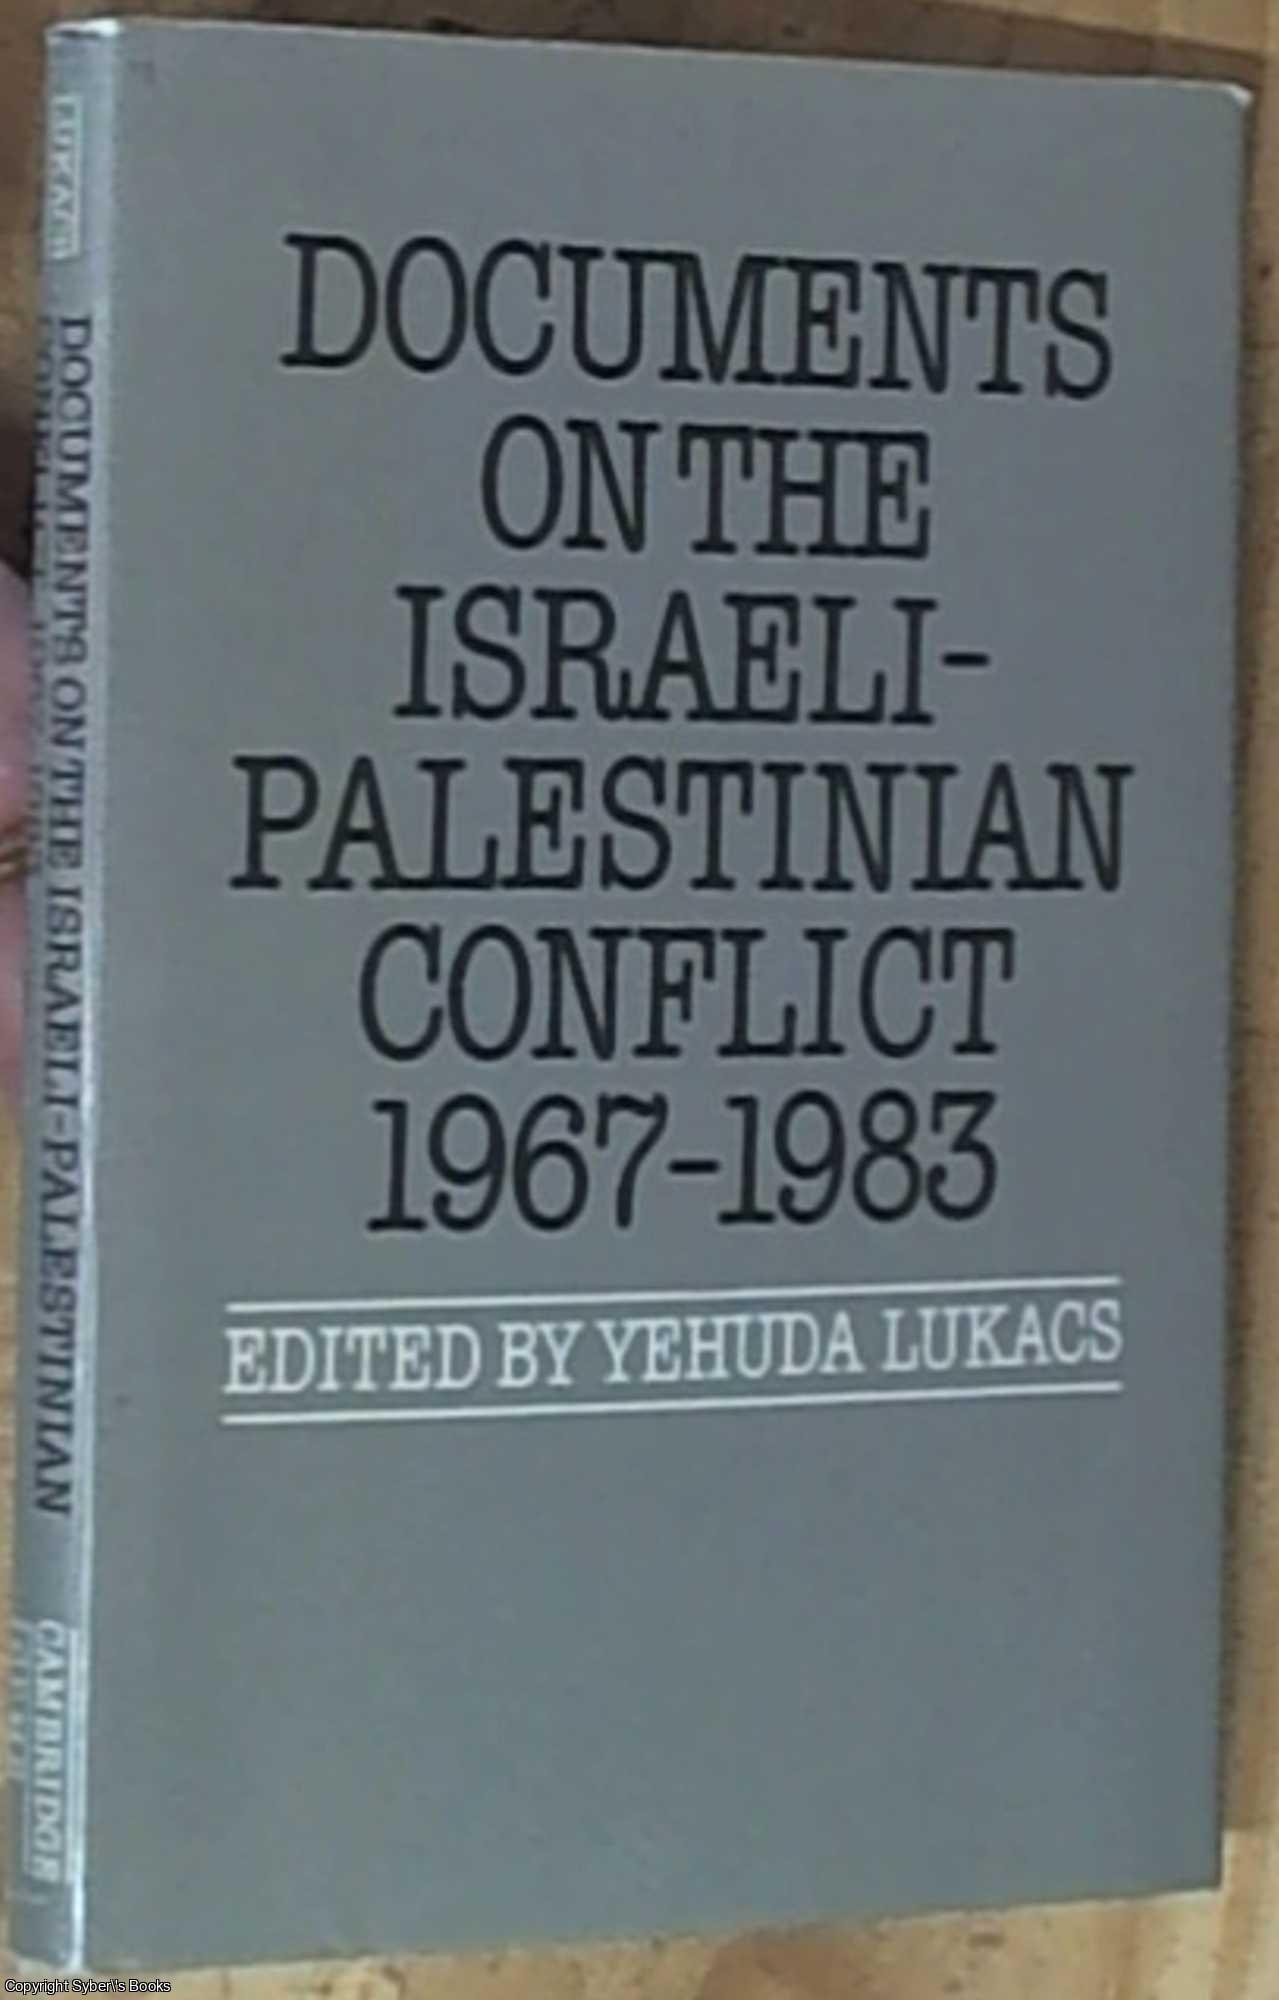 Lukacs, Yehuda  Editor - Documents on the Israeli-Palestinian Conflict, 1967-1983